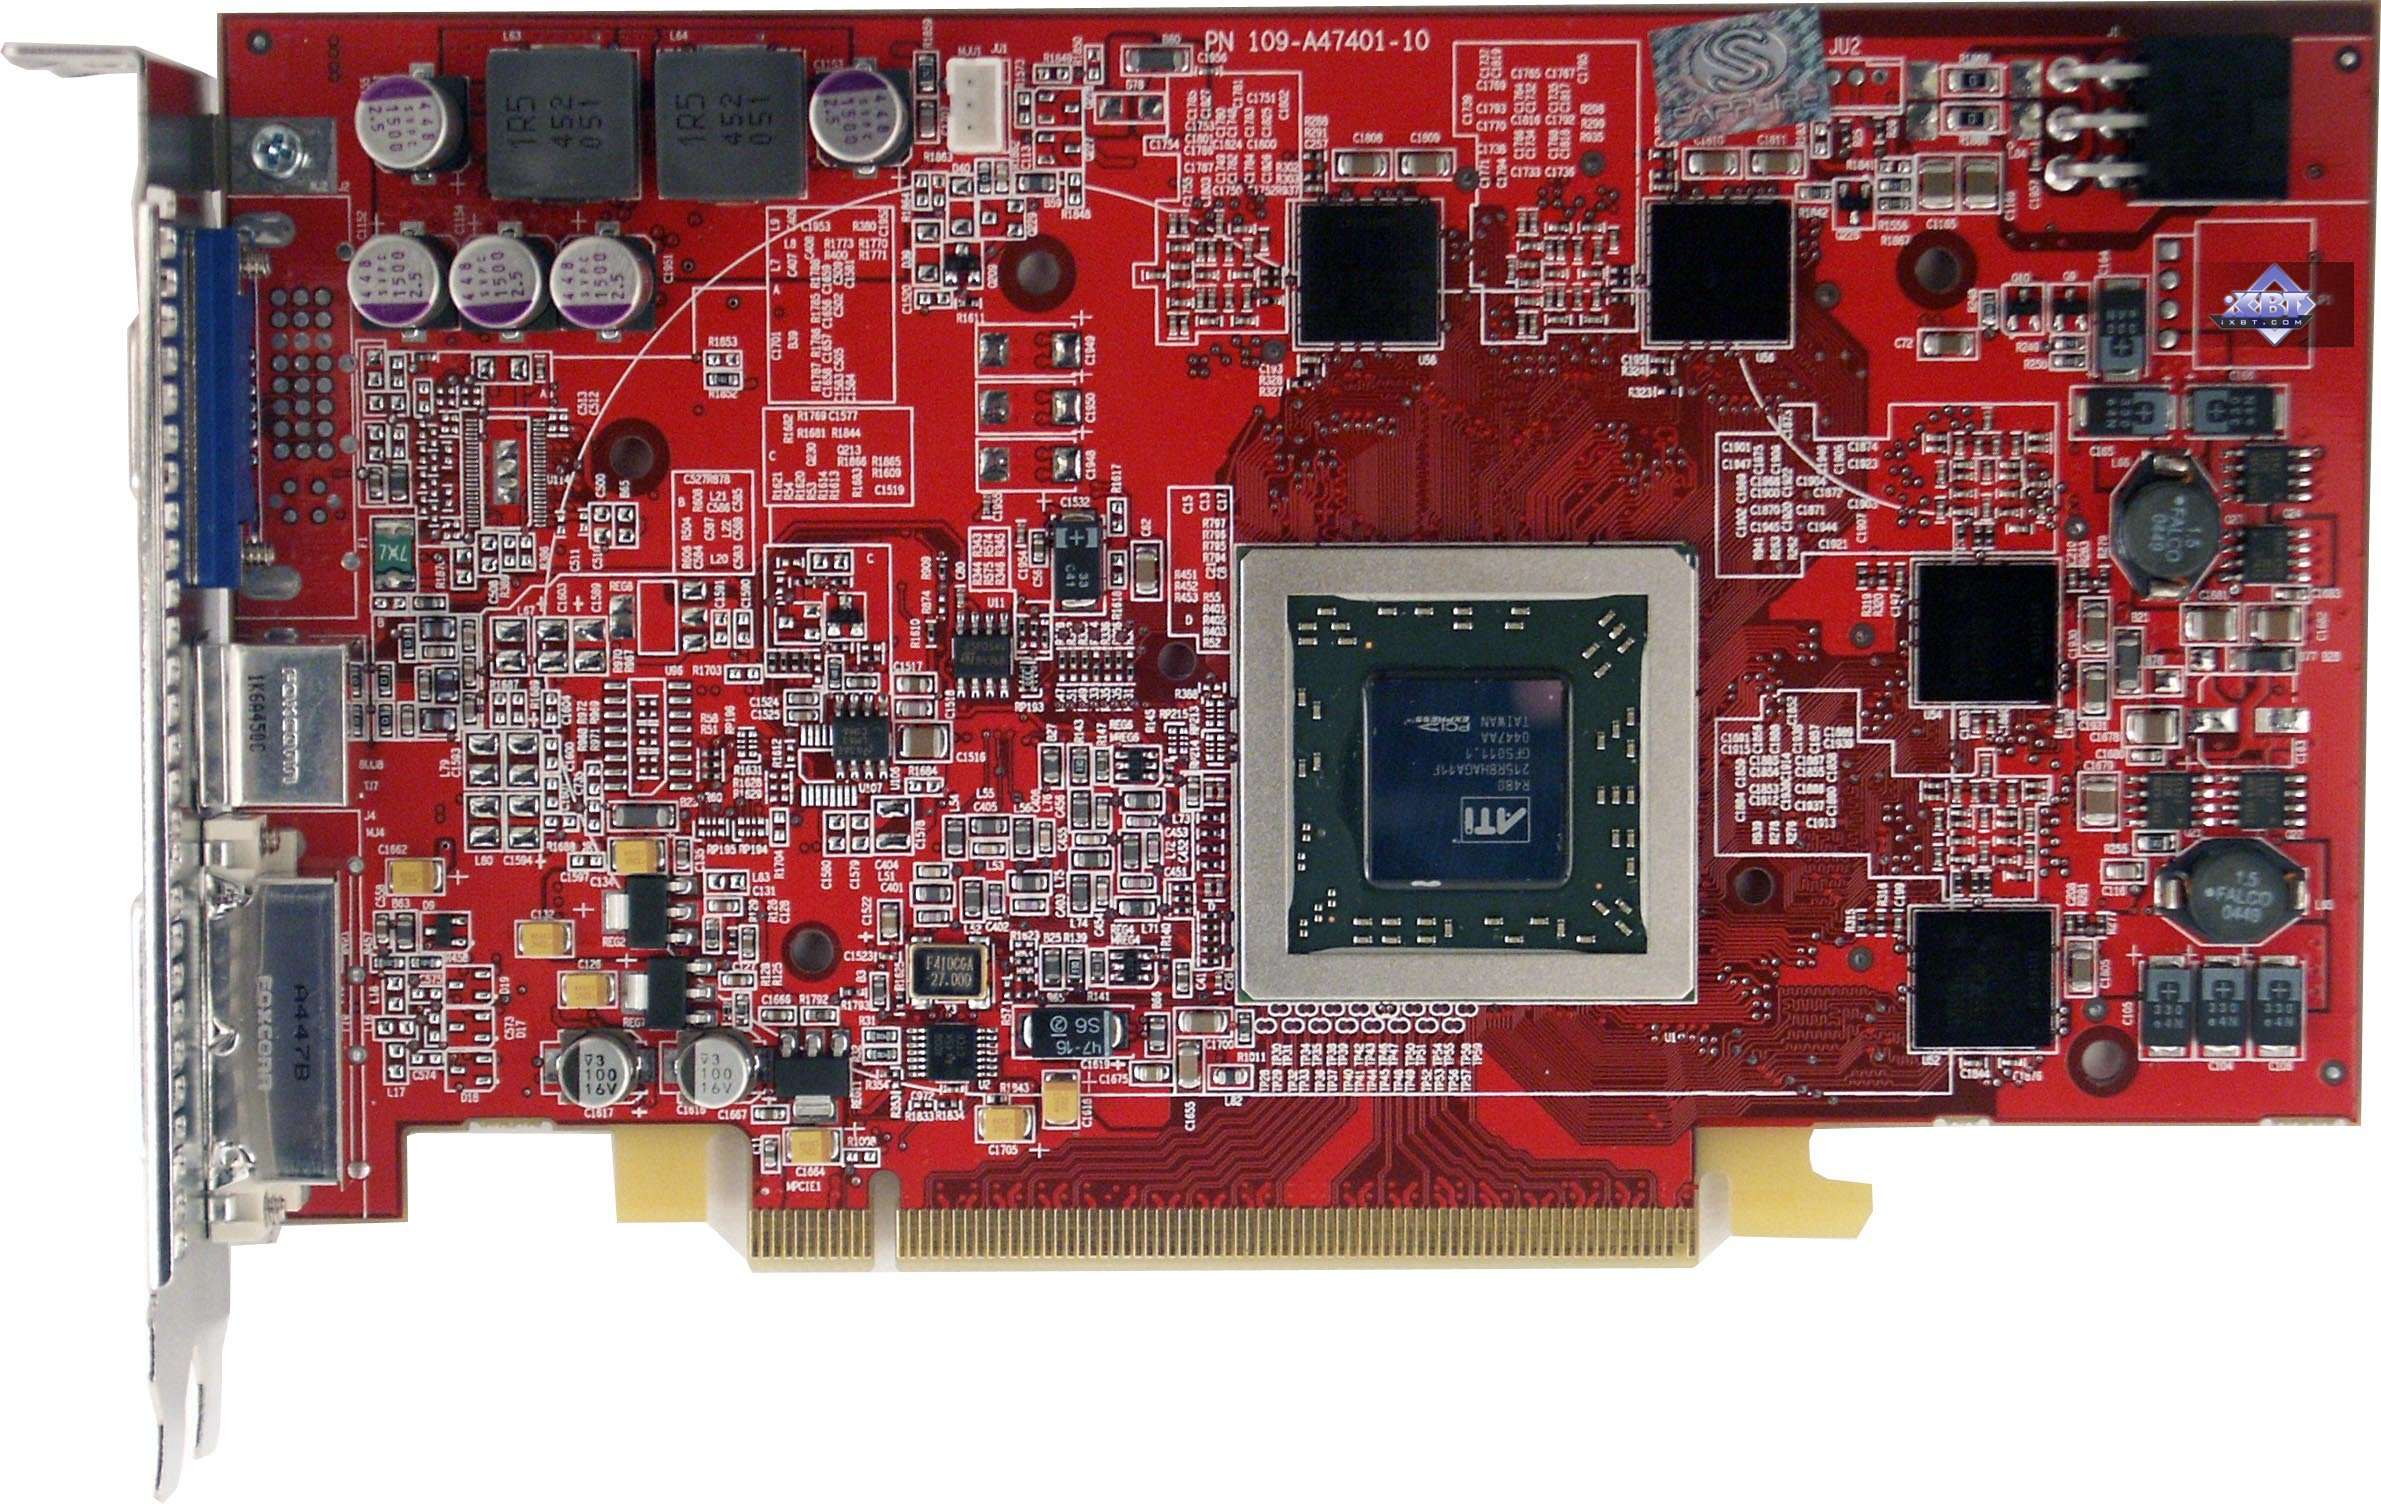 Amd 7800 series драйвер. Radeon x800. Radeon x700 128mb. Sapphire Radeon x850. AMD Radeon x1550.